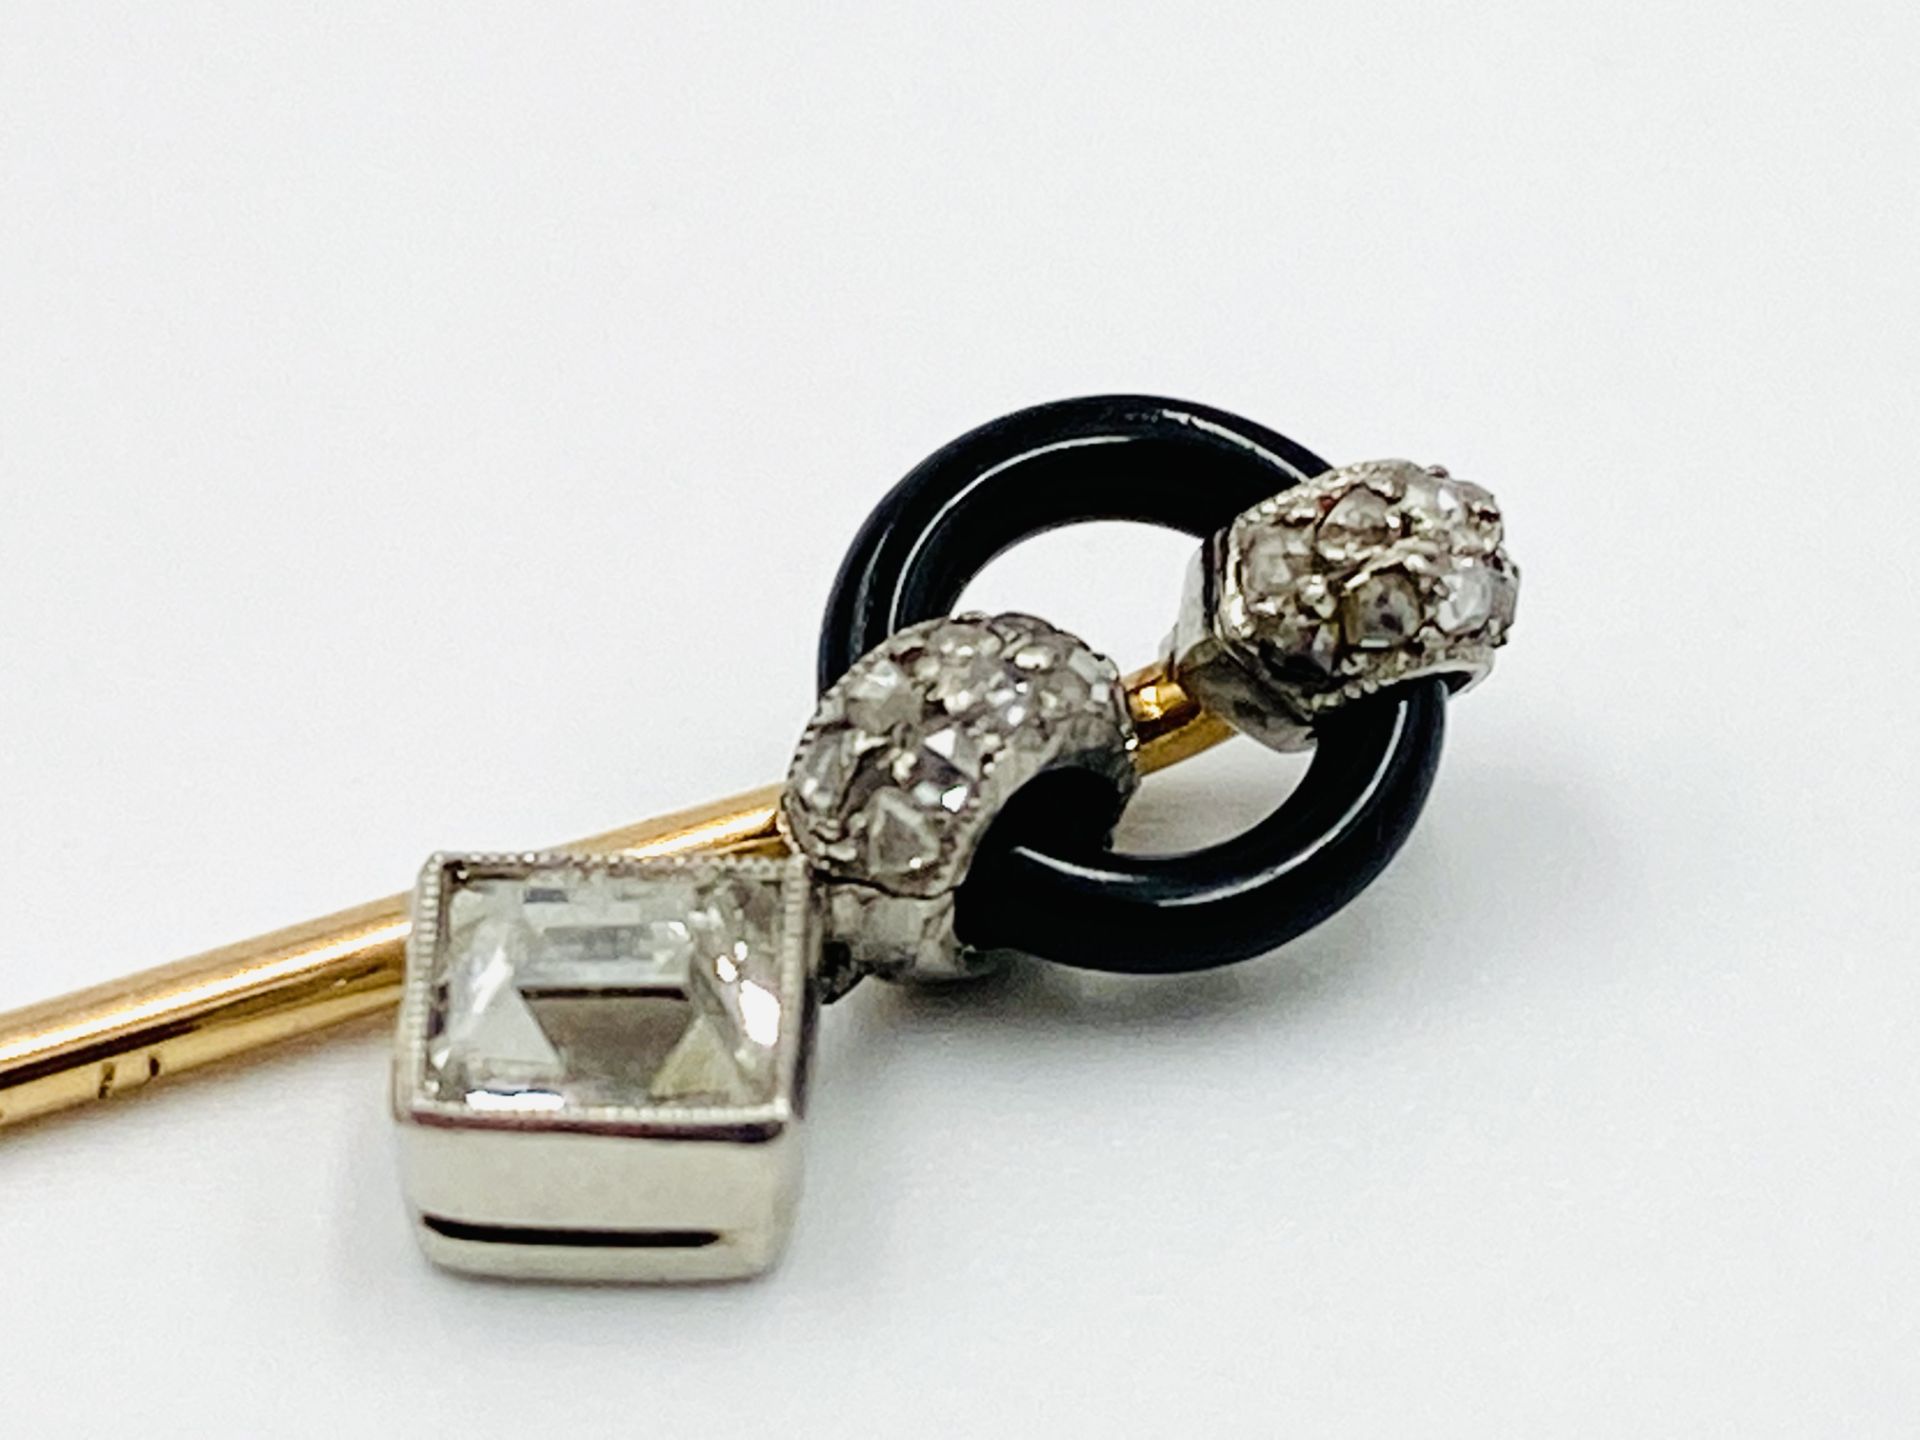 Cartier Paris, gold, onyx and diamond stick pin - Image 2 of 3